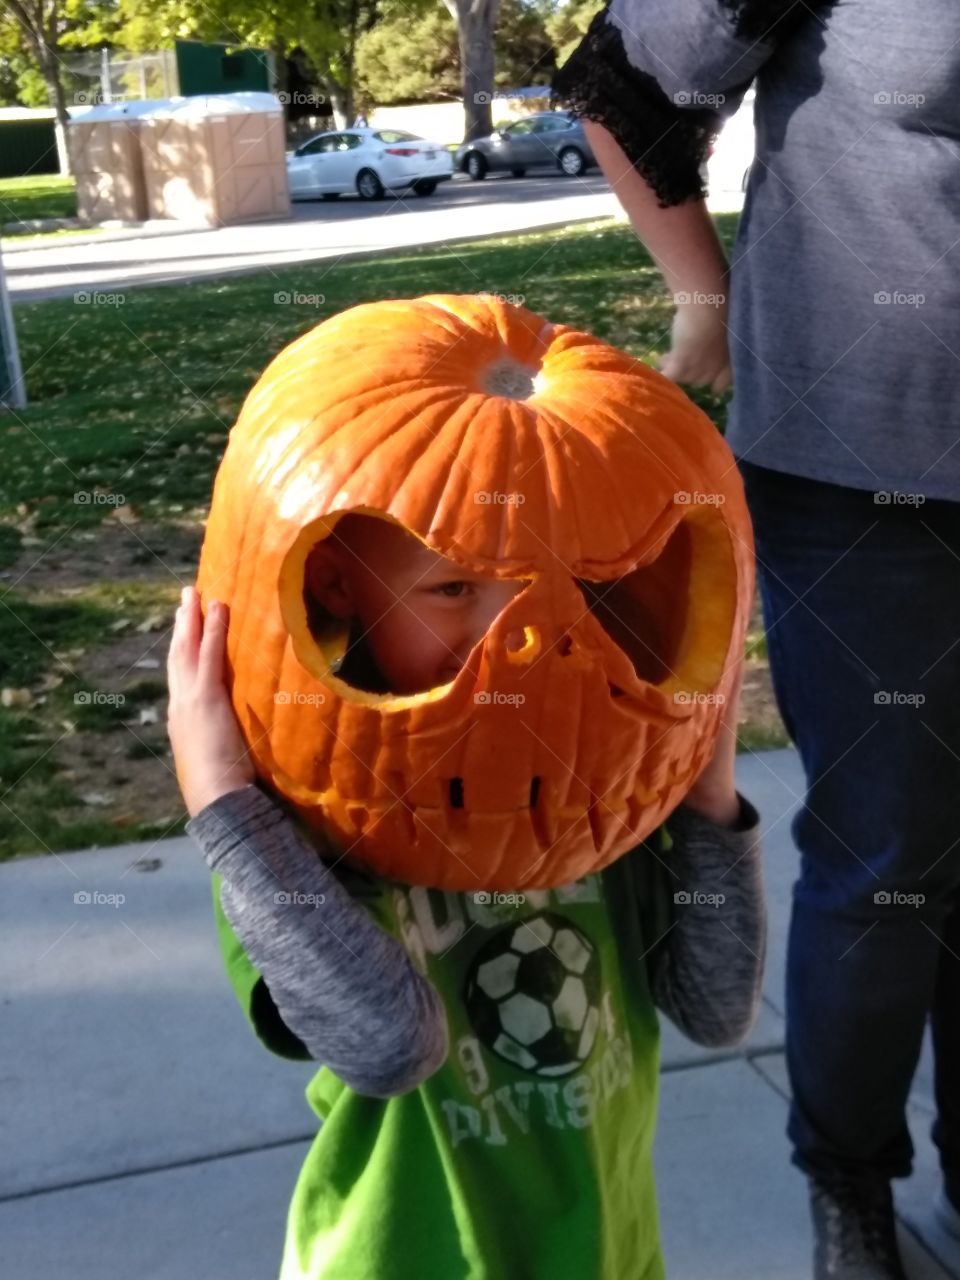 Jack the pumpkin King